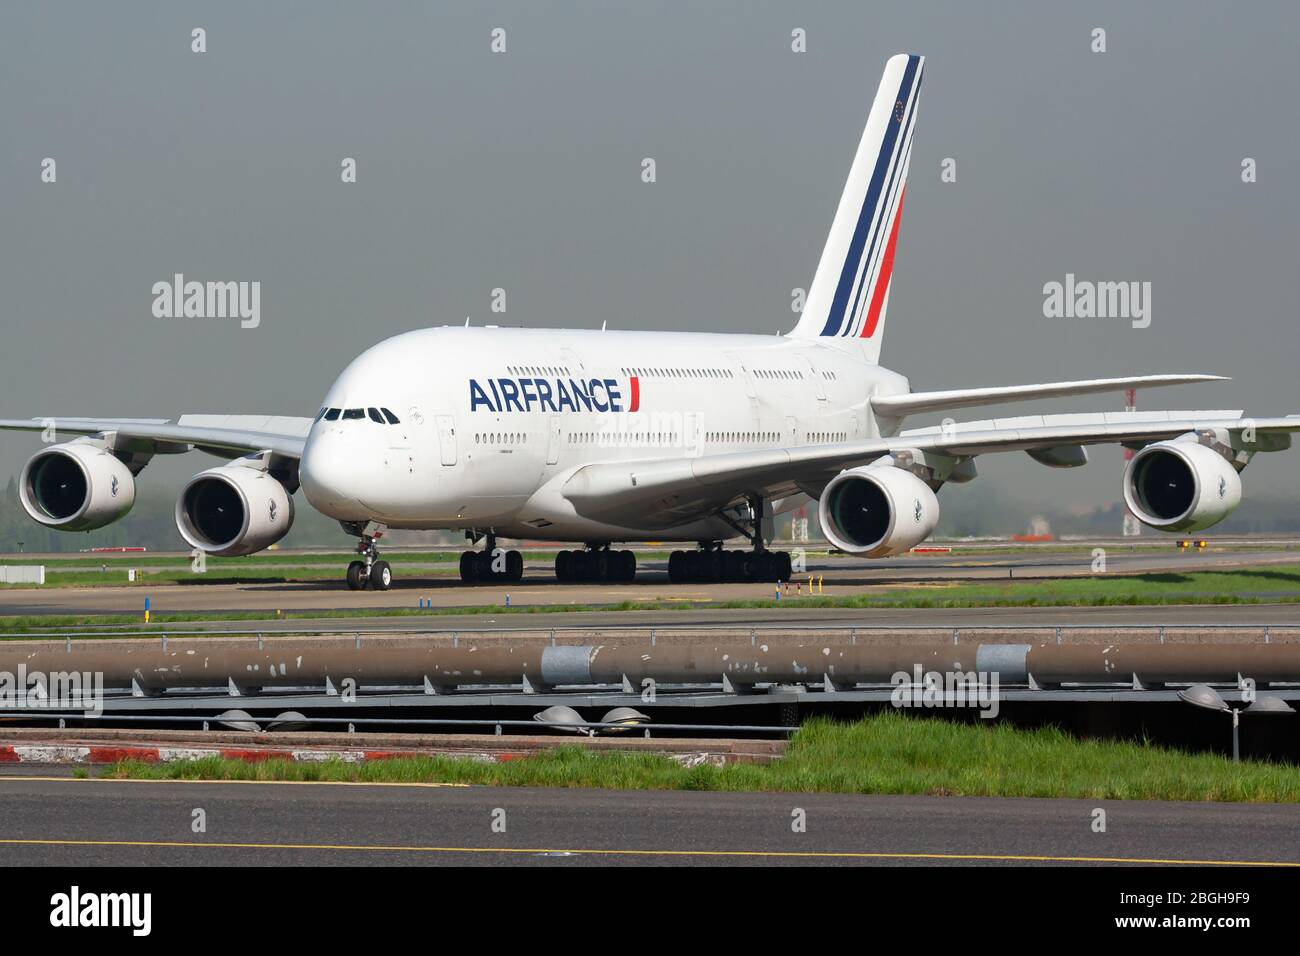 Paris/Frankreich - 24. April 2015: Air France Airbus A380 F-HPJI Passagierflugzeug Ankunft und Landung am Flughafen Paris Charles de Gaulle Stockfoto